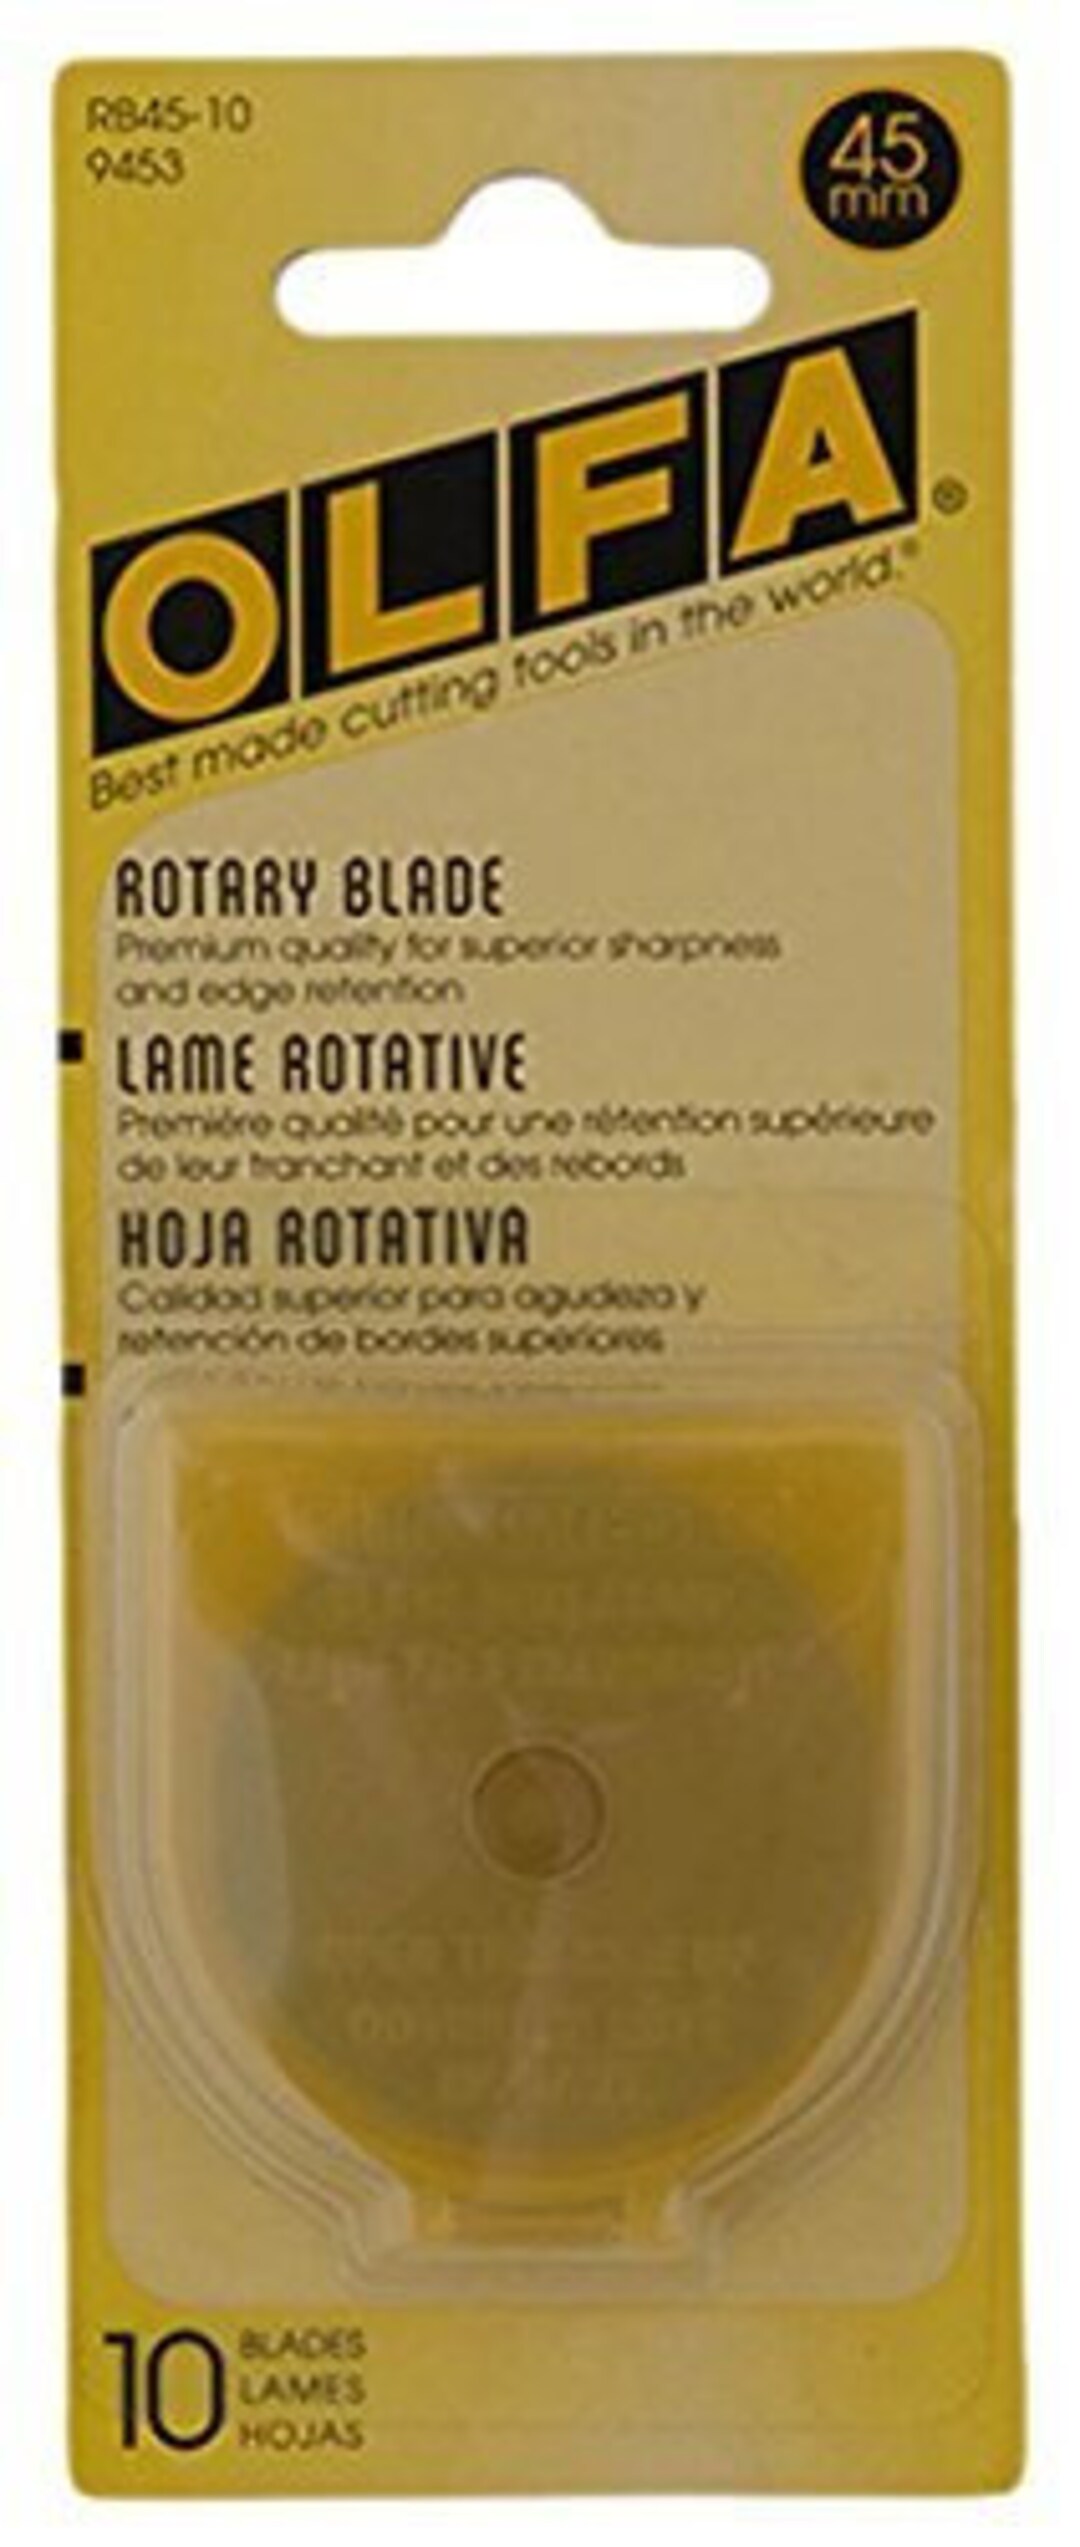 OLFA 45mm Rotary Blades 10-pack 